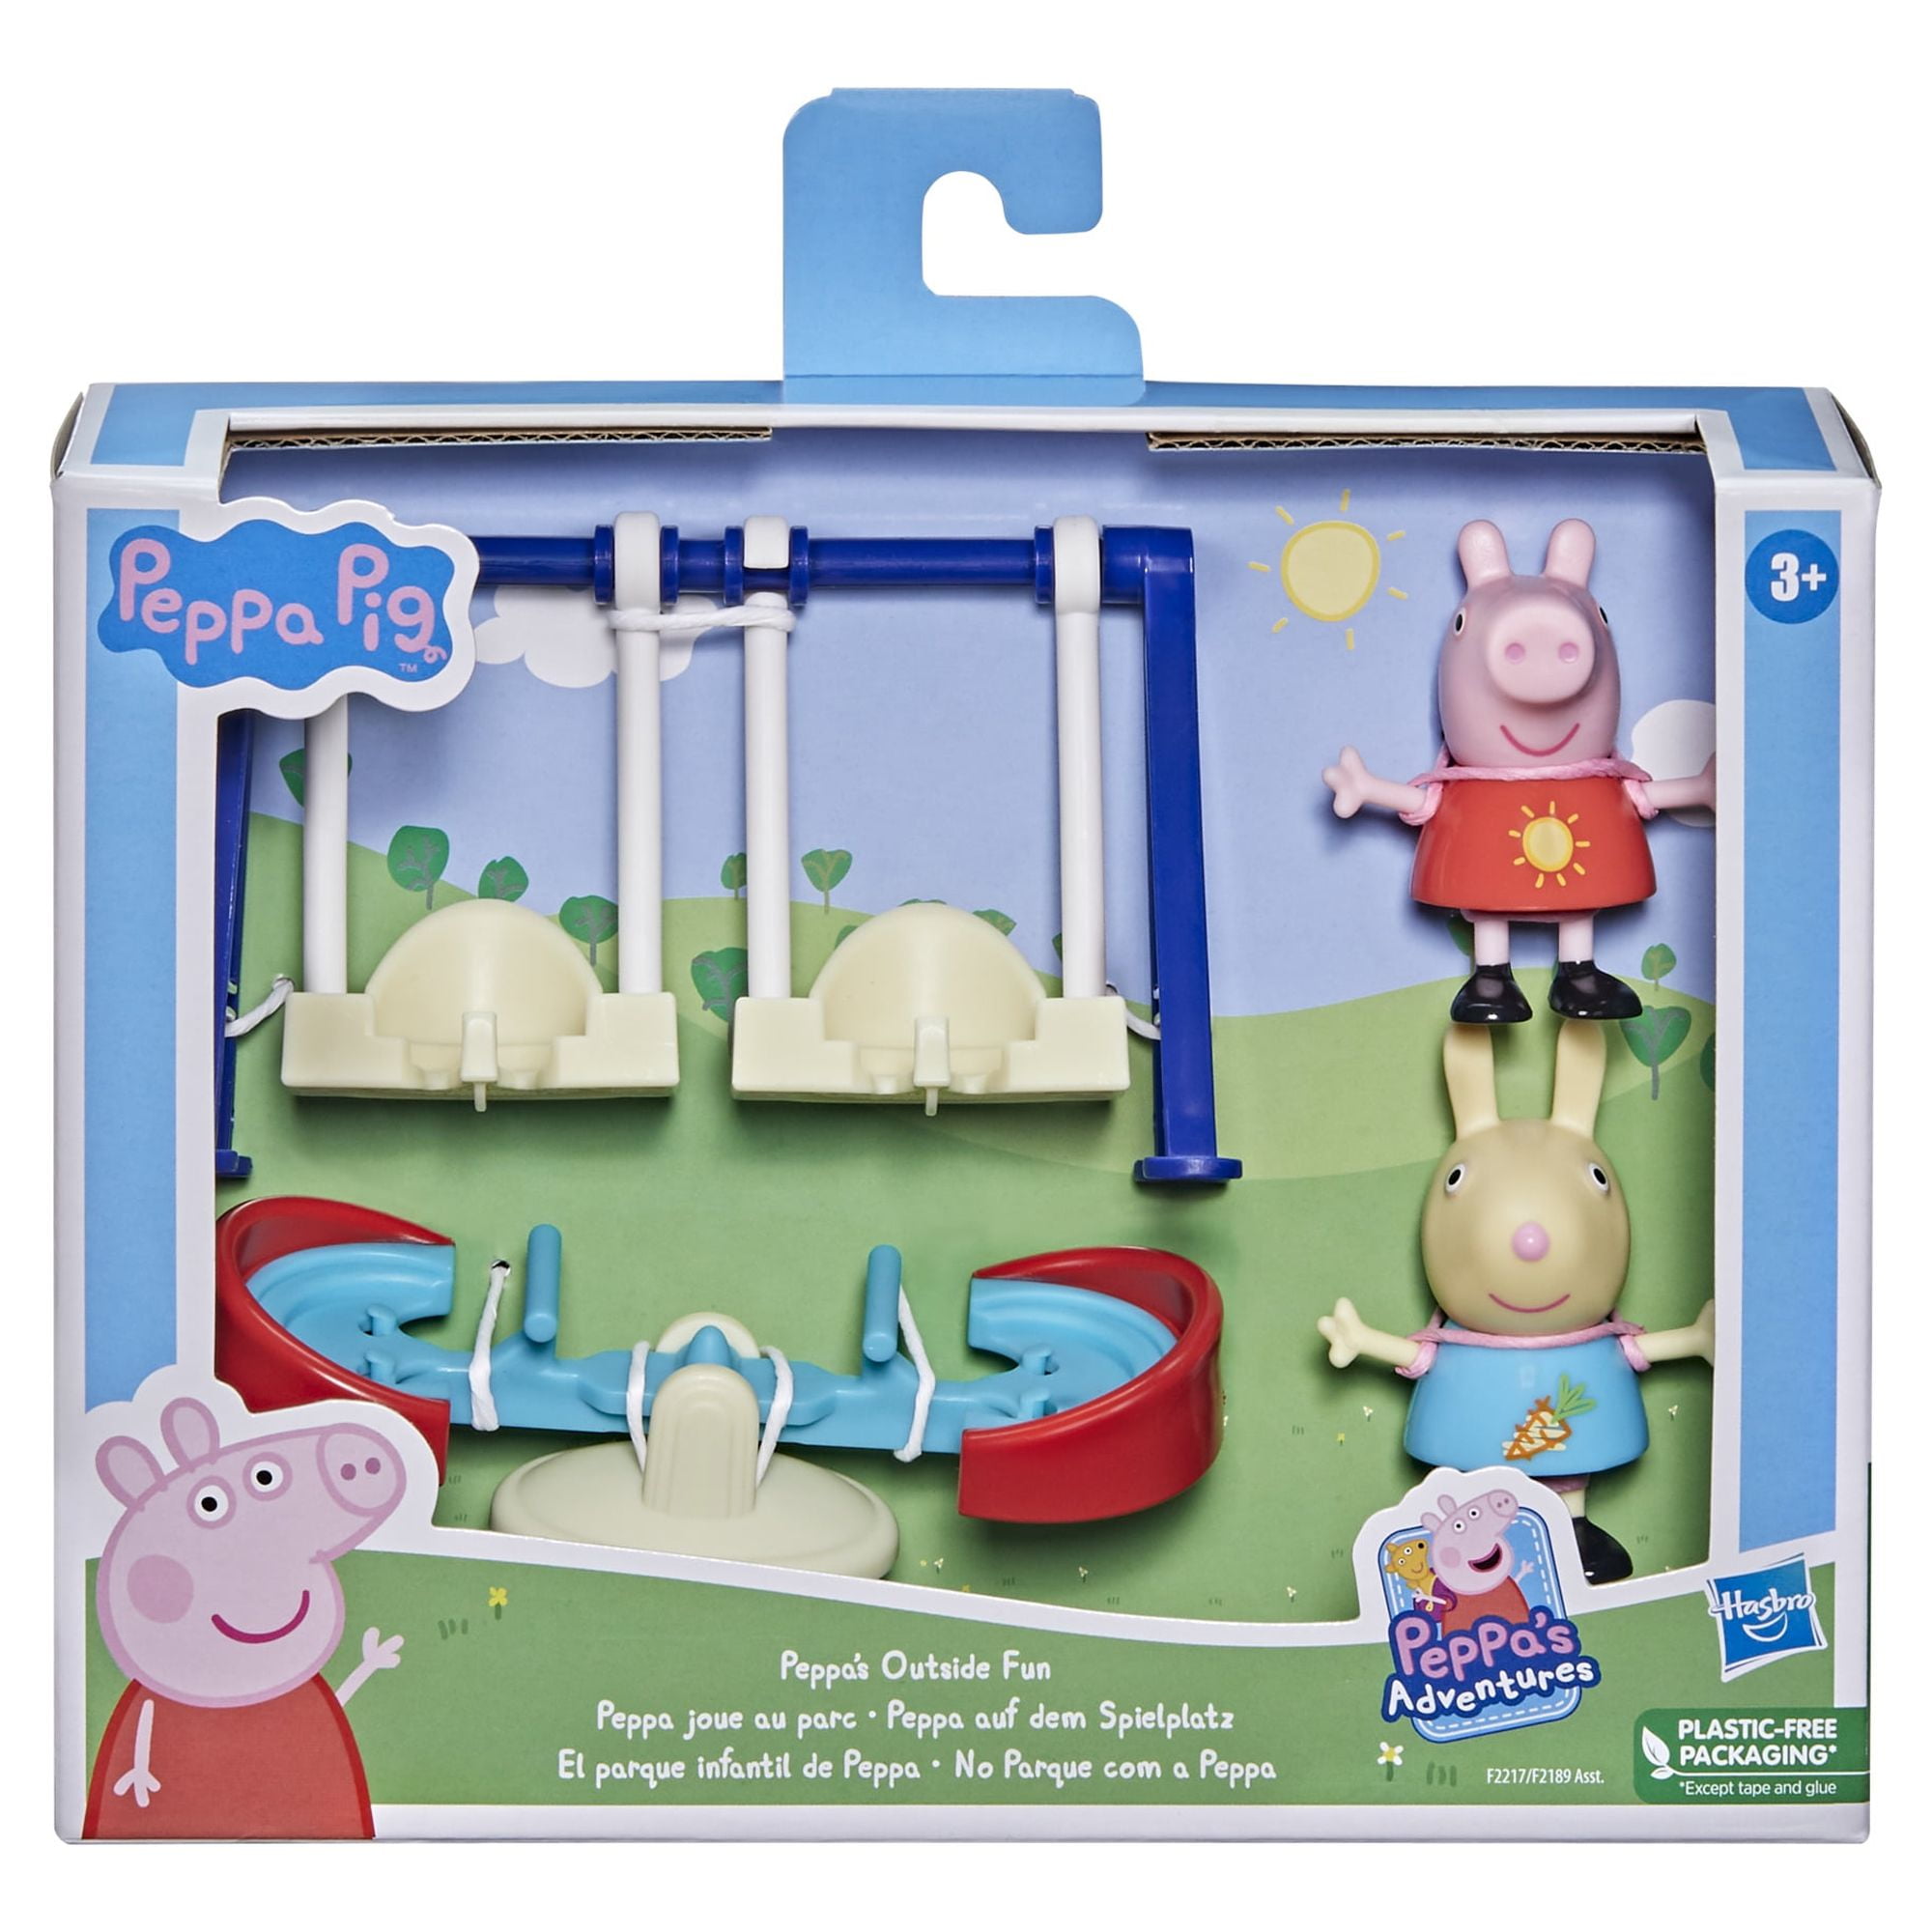 Peppa Pig Peppa's Adventures Peppa's Balloon Park - Juguete preescolar,  juego perfecto para rellenar cestas de Pascua, juguetes de gran regalo para